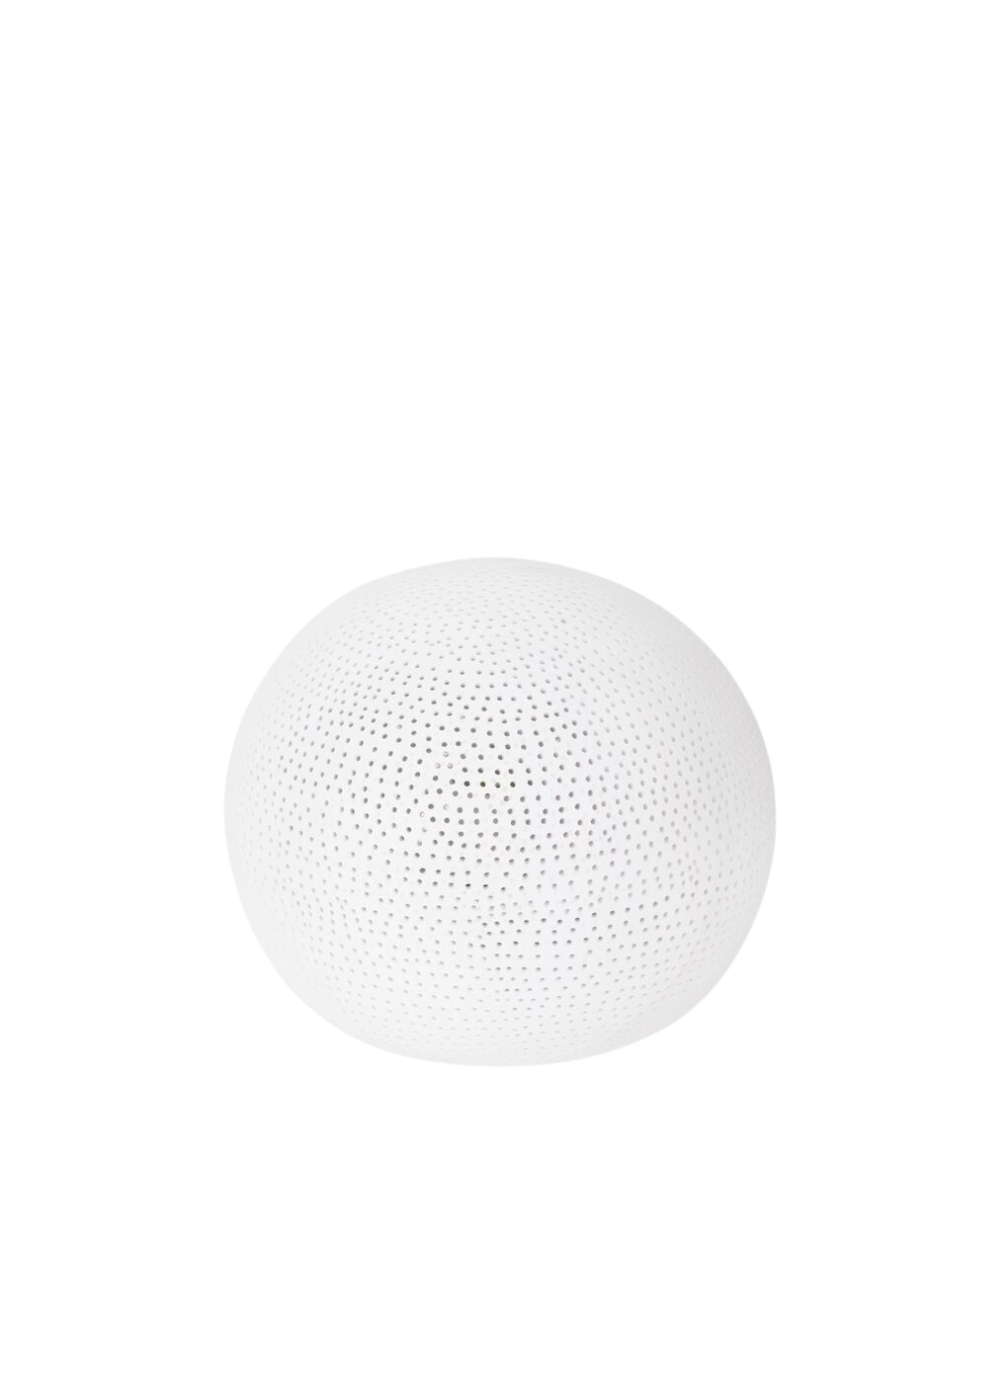 dianna sphere table lamp - white